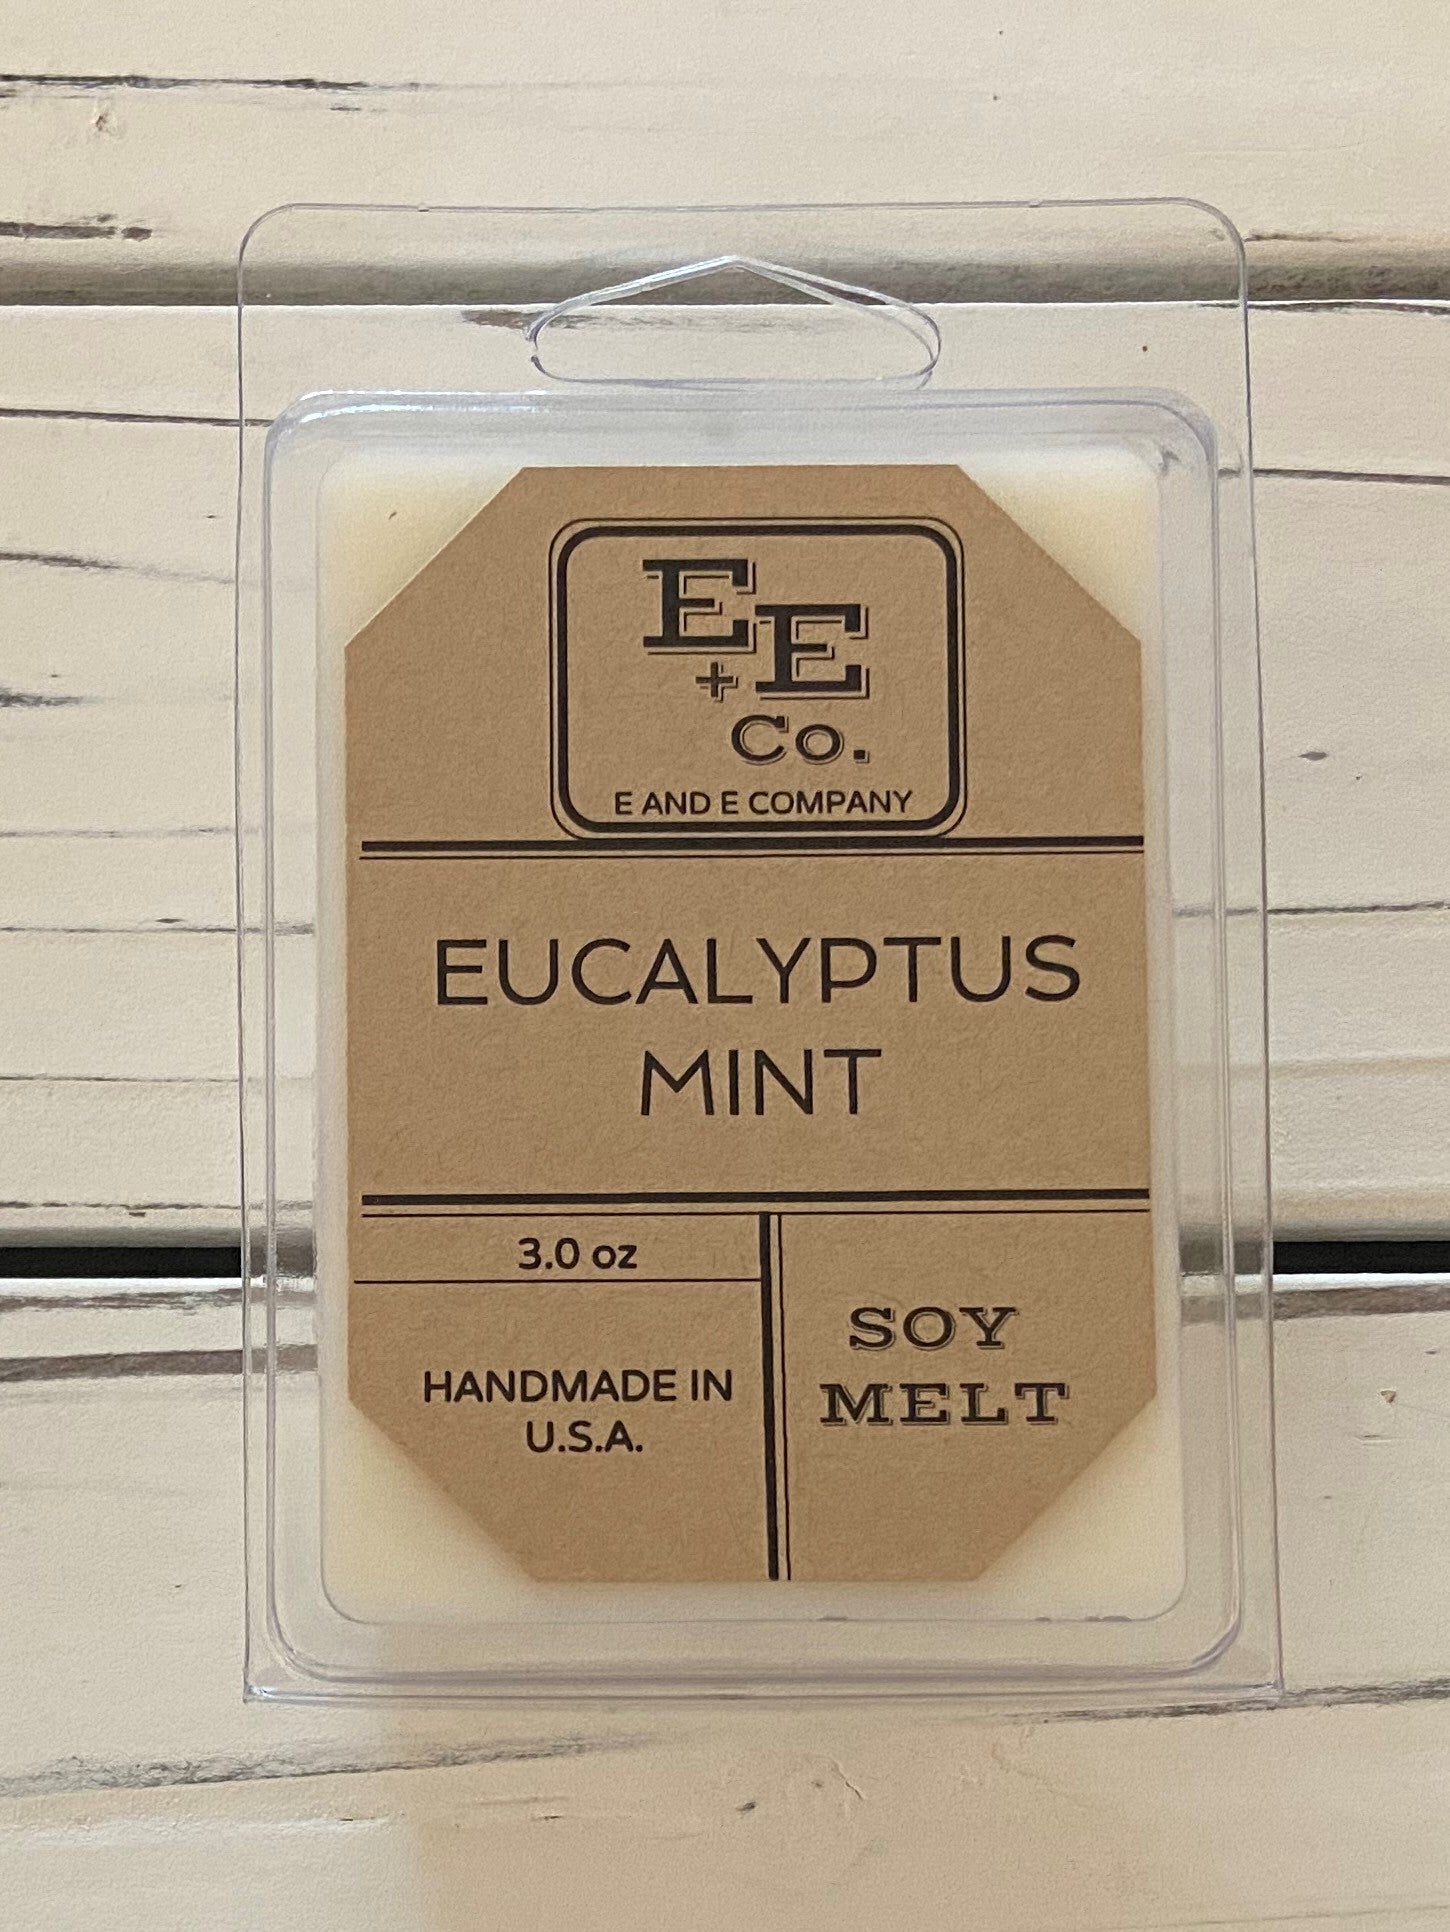 New Sonoma Scented Wax Cubes Melt - Eucalyptus & Mint Leaf - bergamot